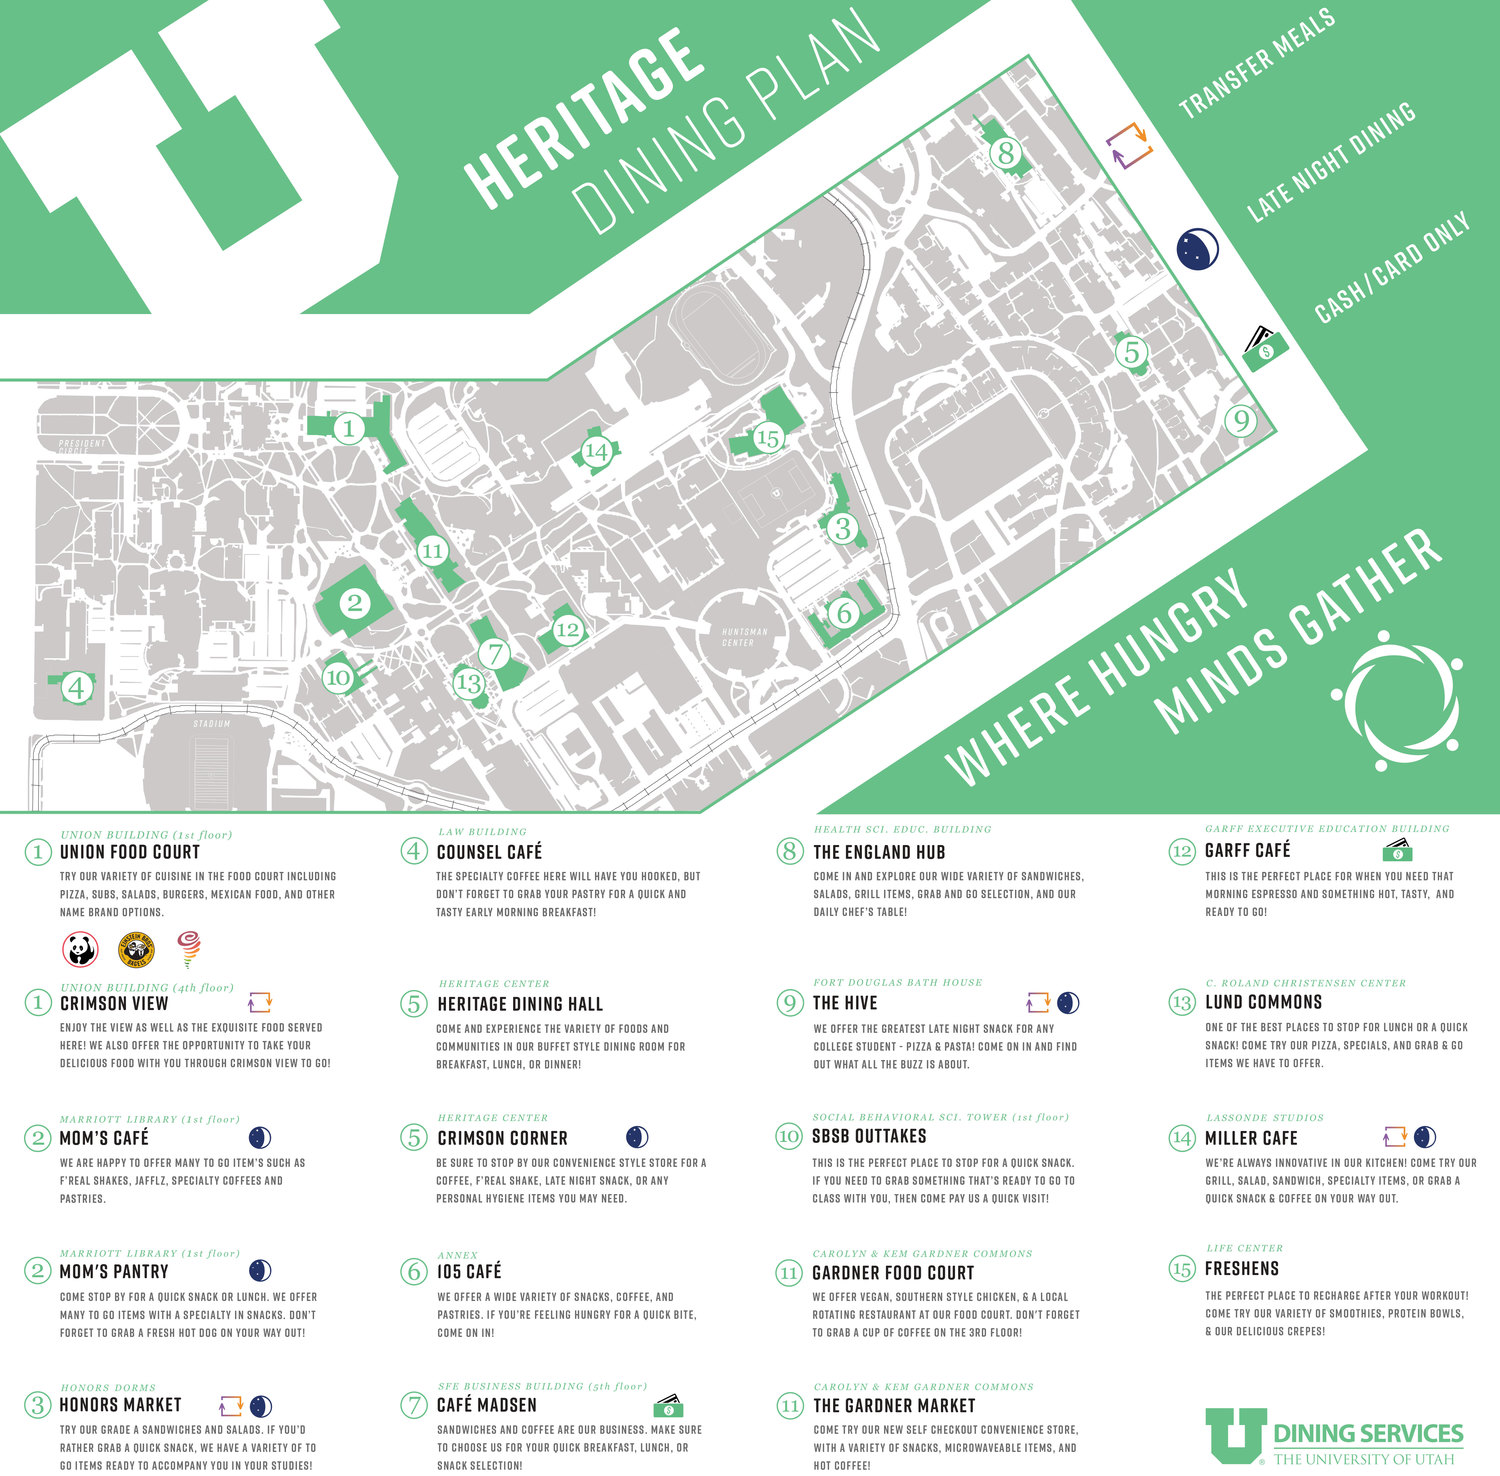 Map Of University Of Utah - Maping Resources